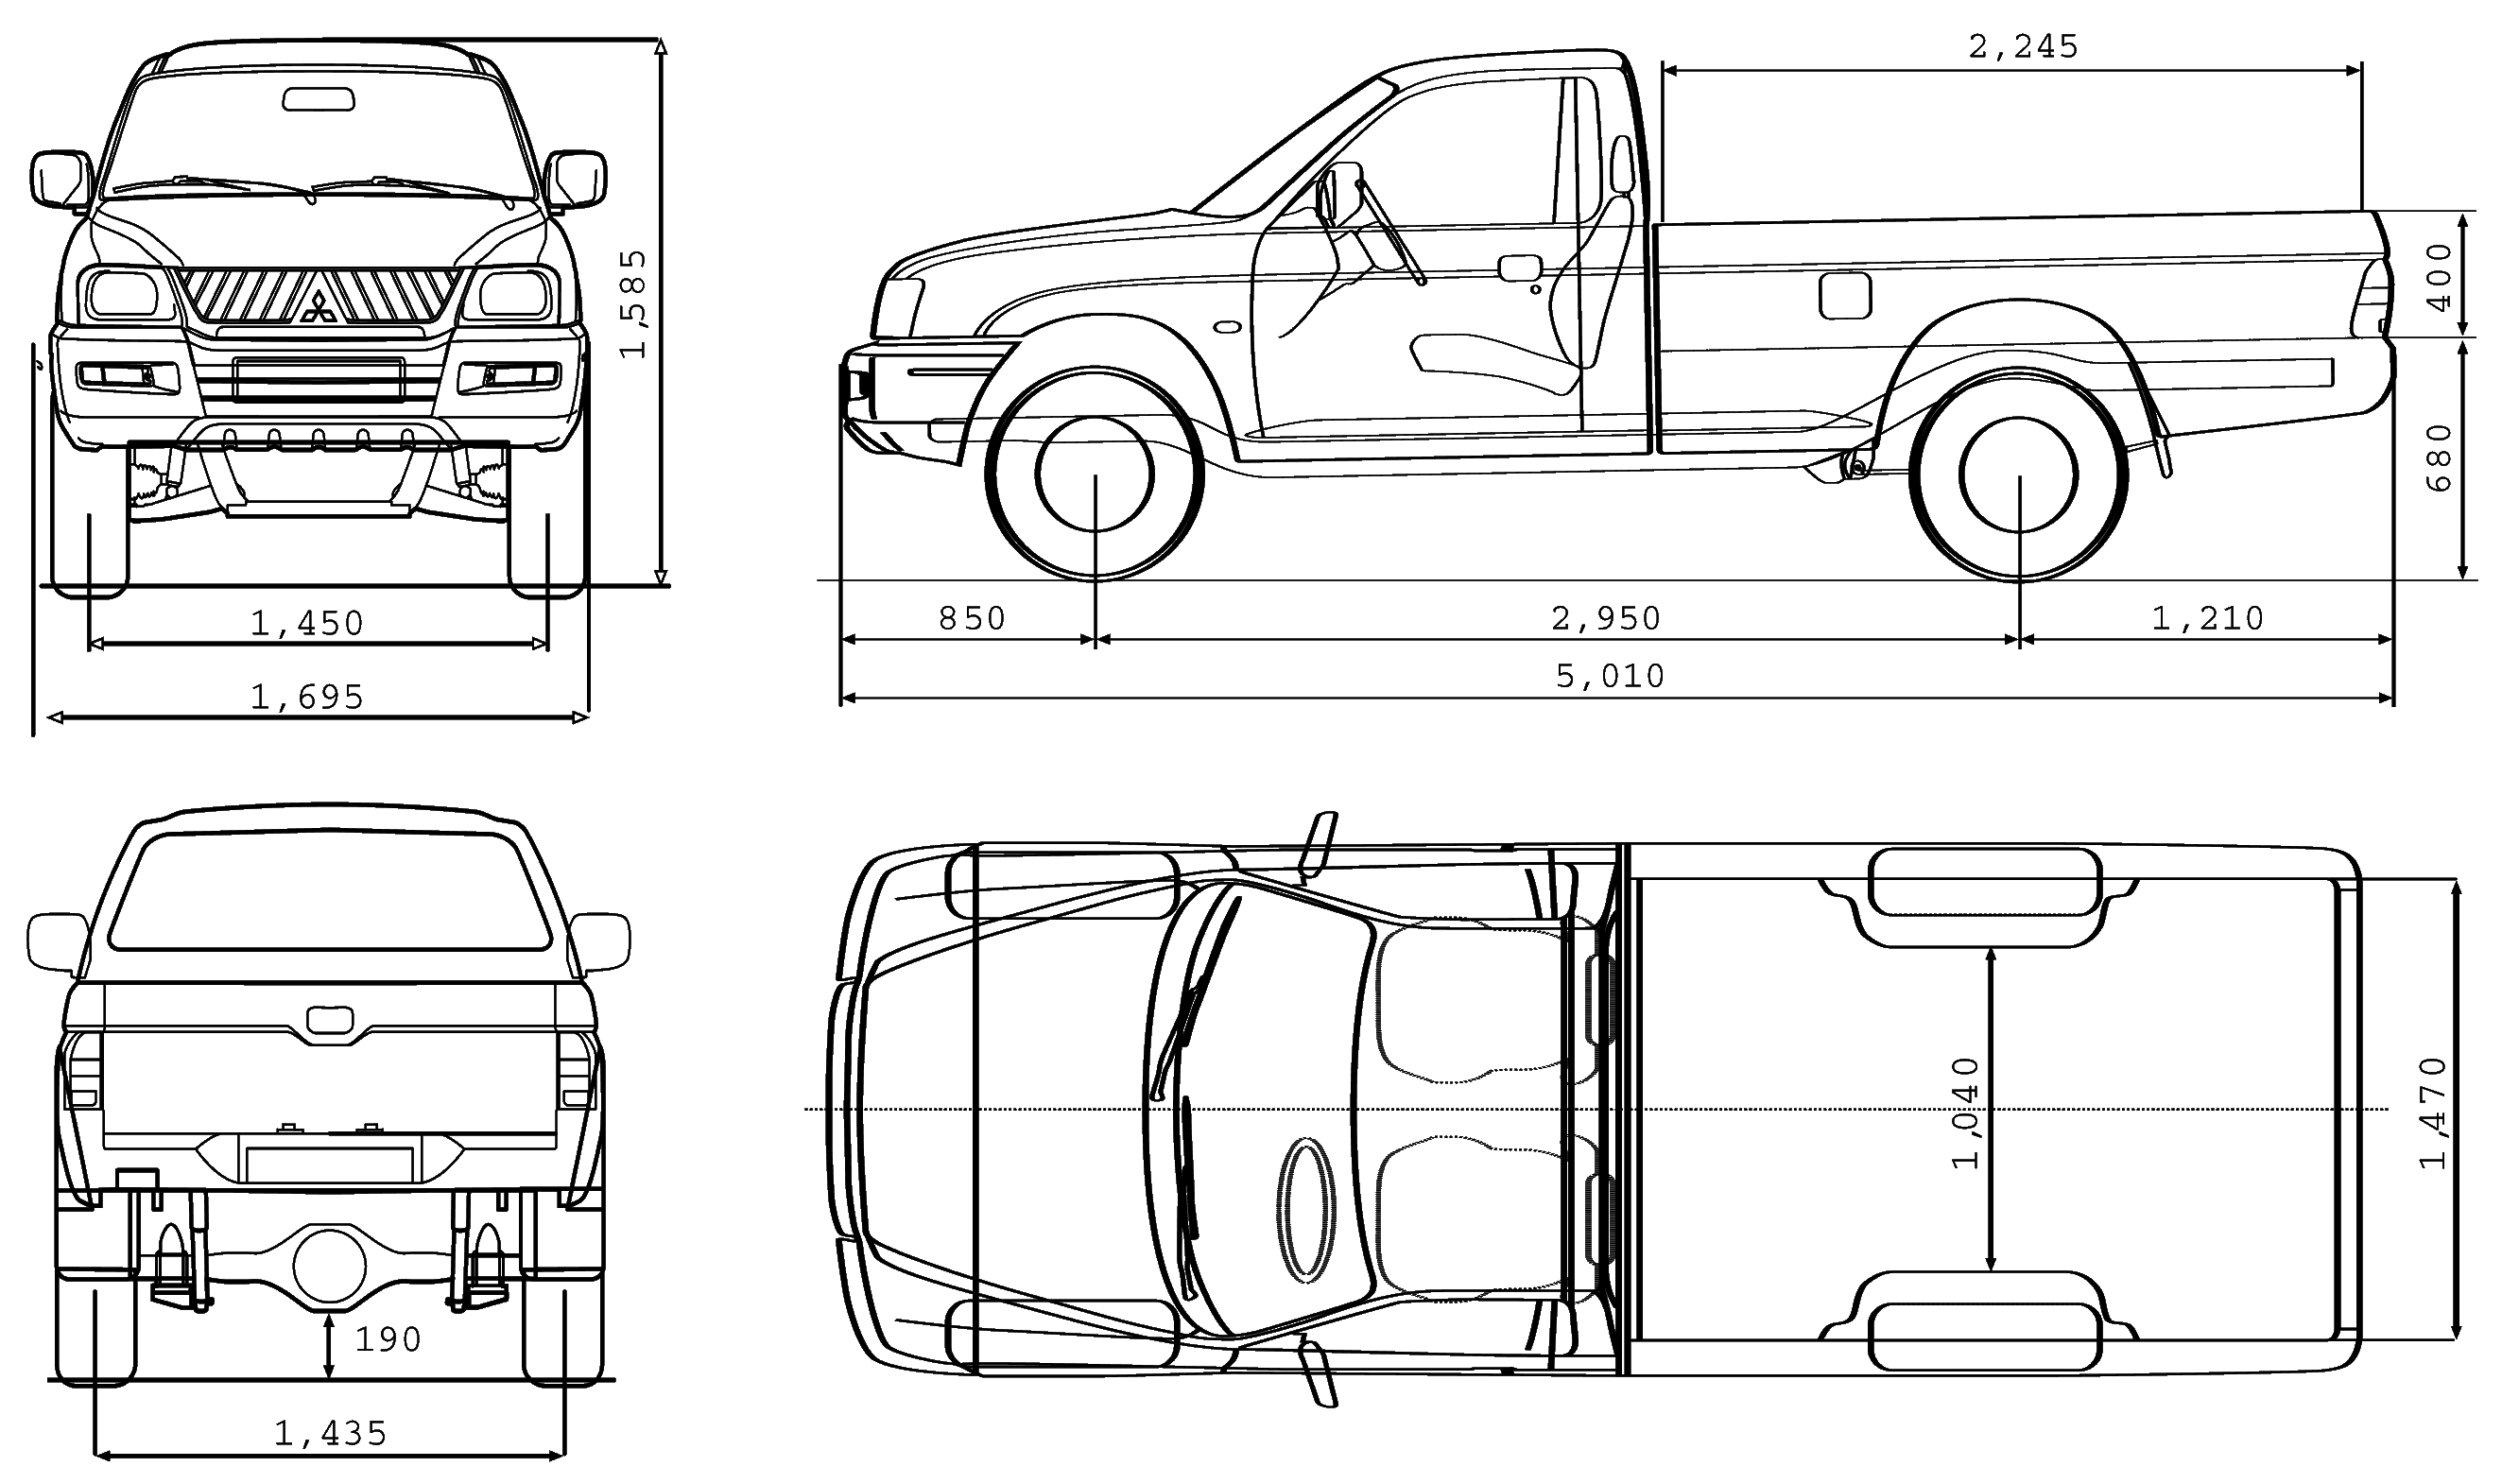 2007 Mitsubishi L200 Single Cab Pickup Truck blueprints